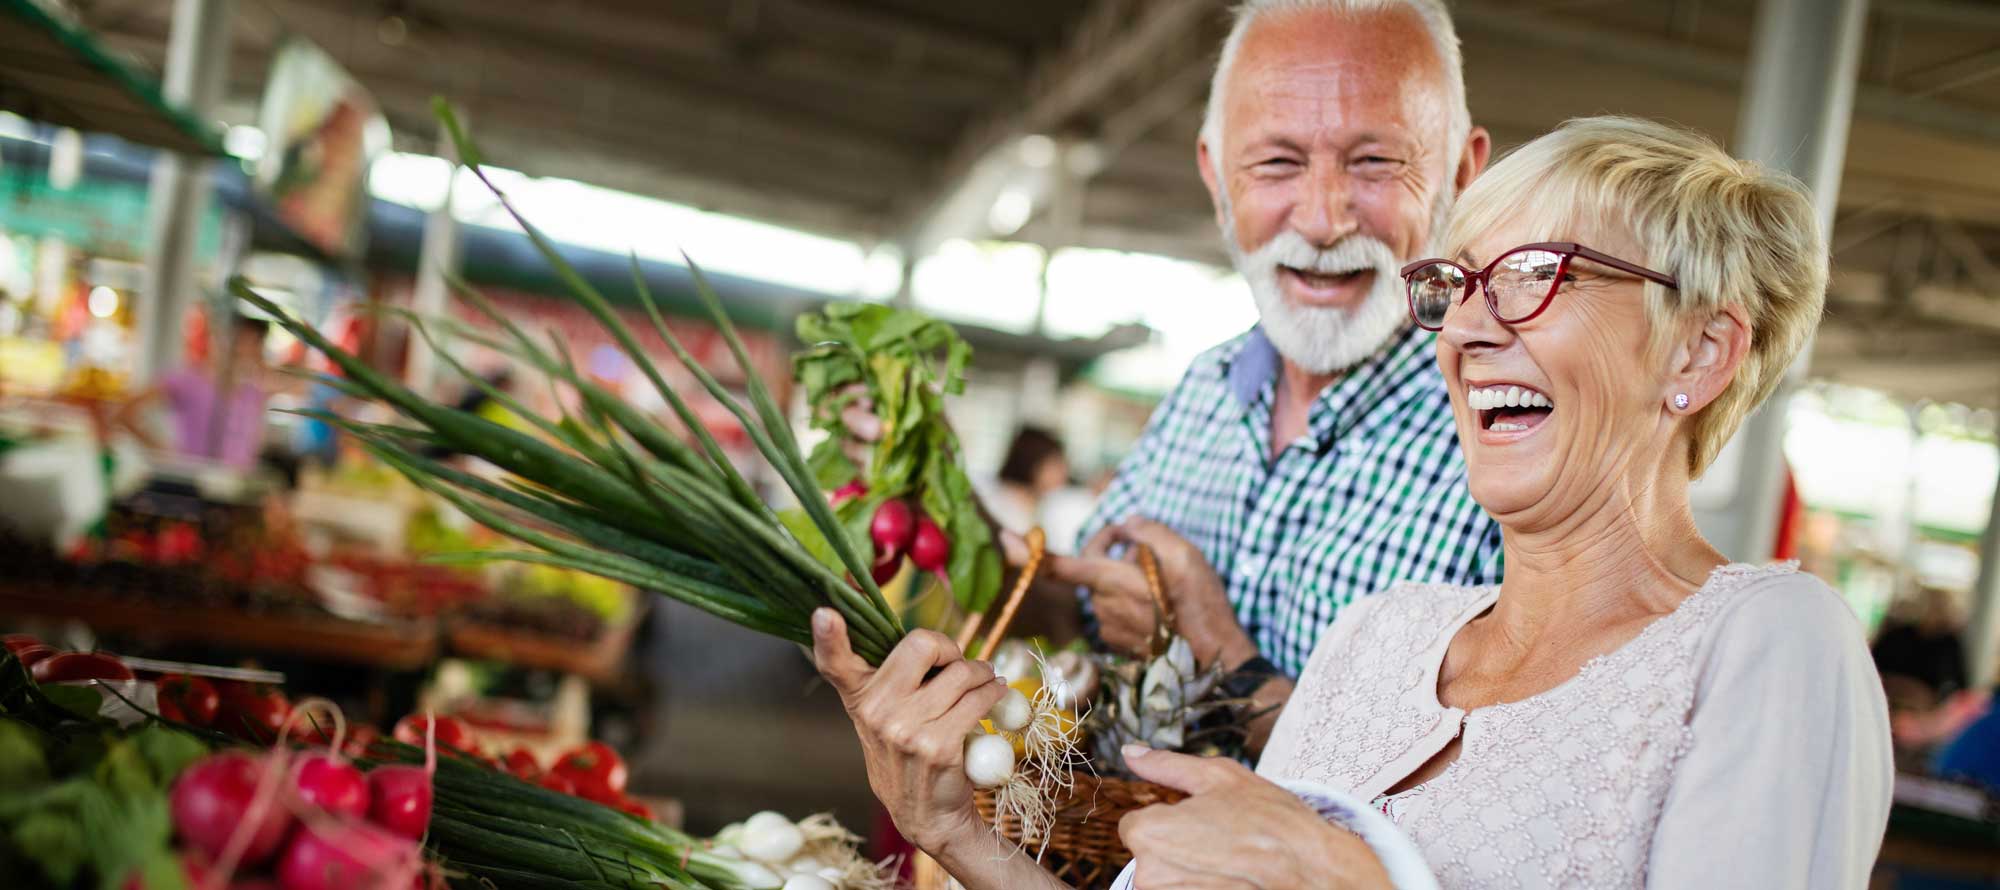 Elderly couple picking vegetables at a farmer's market